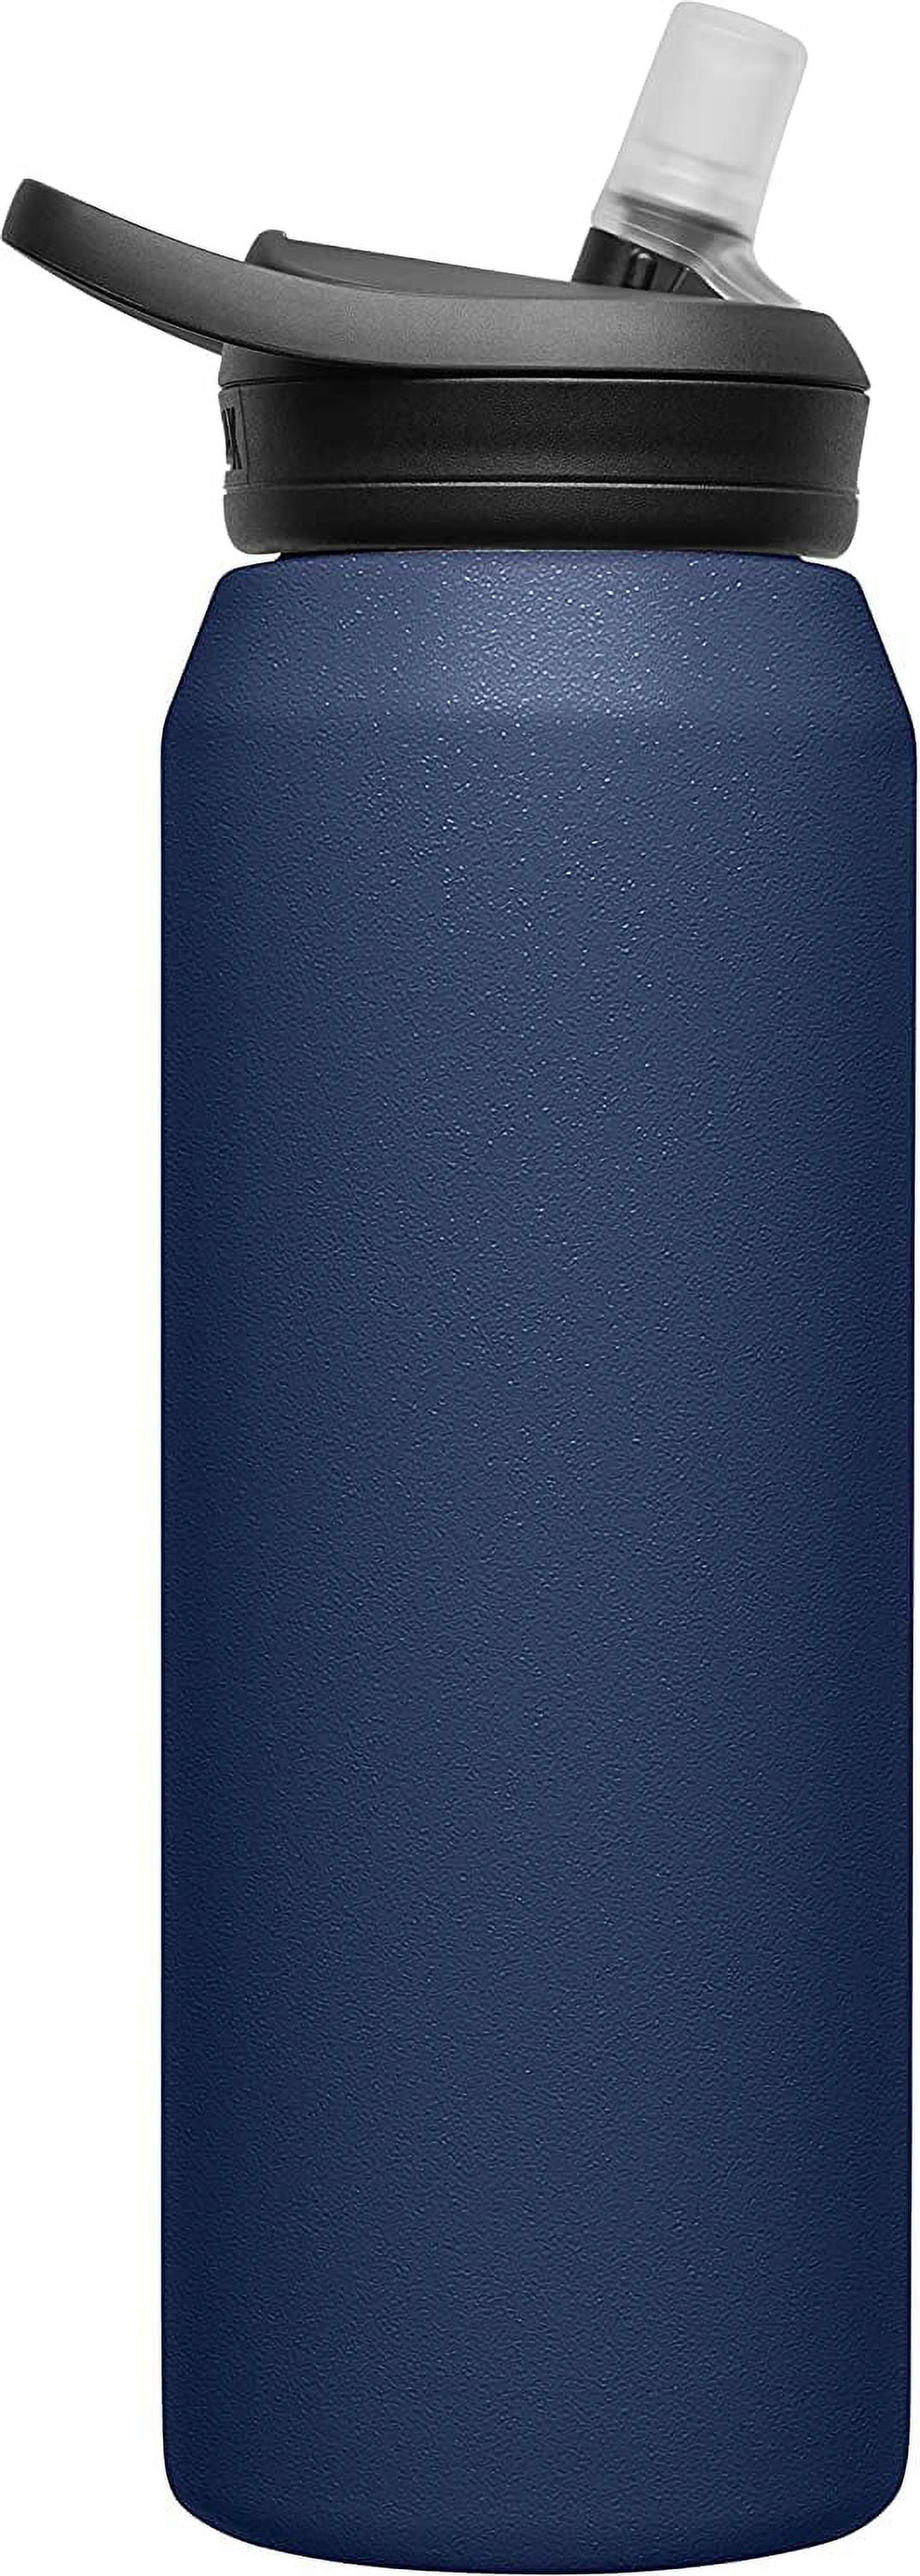 Camelbak 32oz Eddy+ Vacuum Insulated Stainless Steel Water Bottle - Navy  Blue : Target